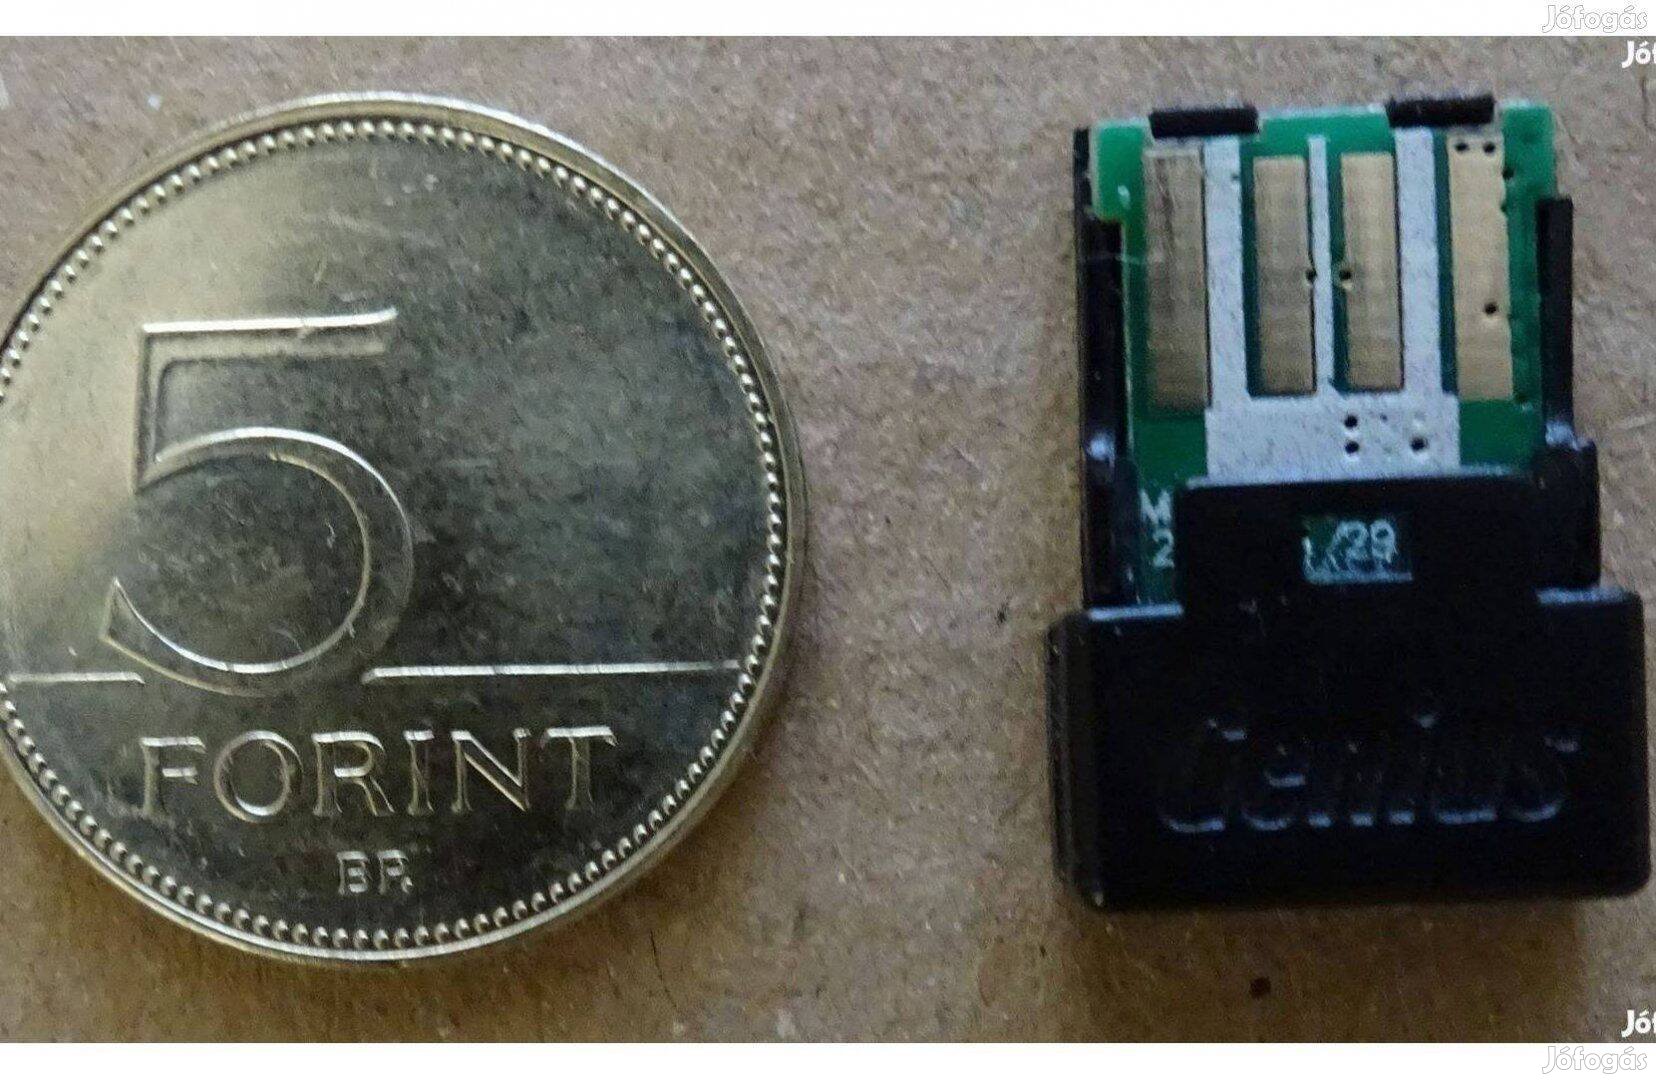 Genius USB nano adapter